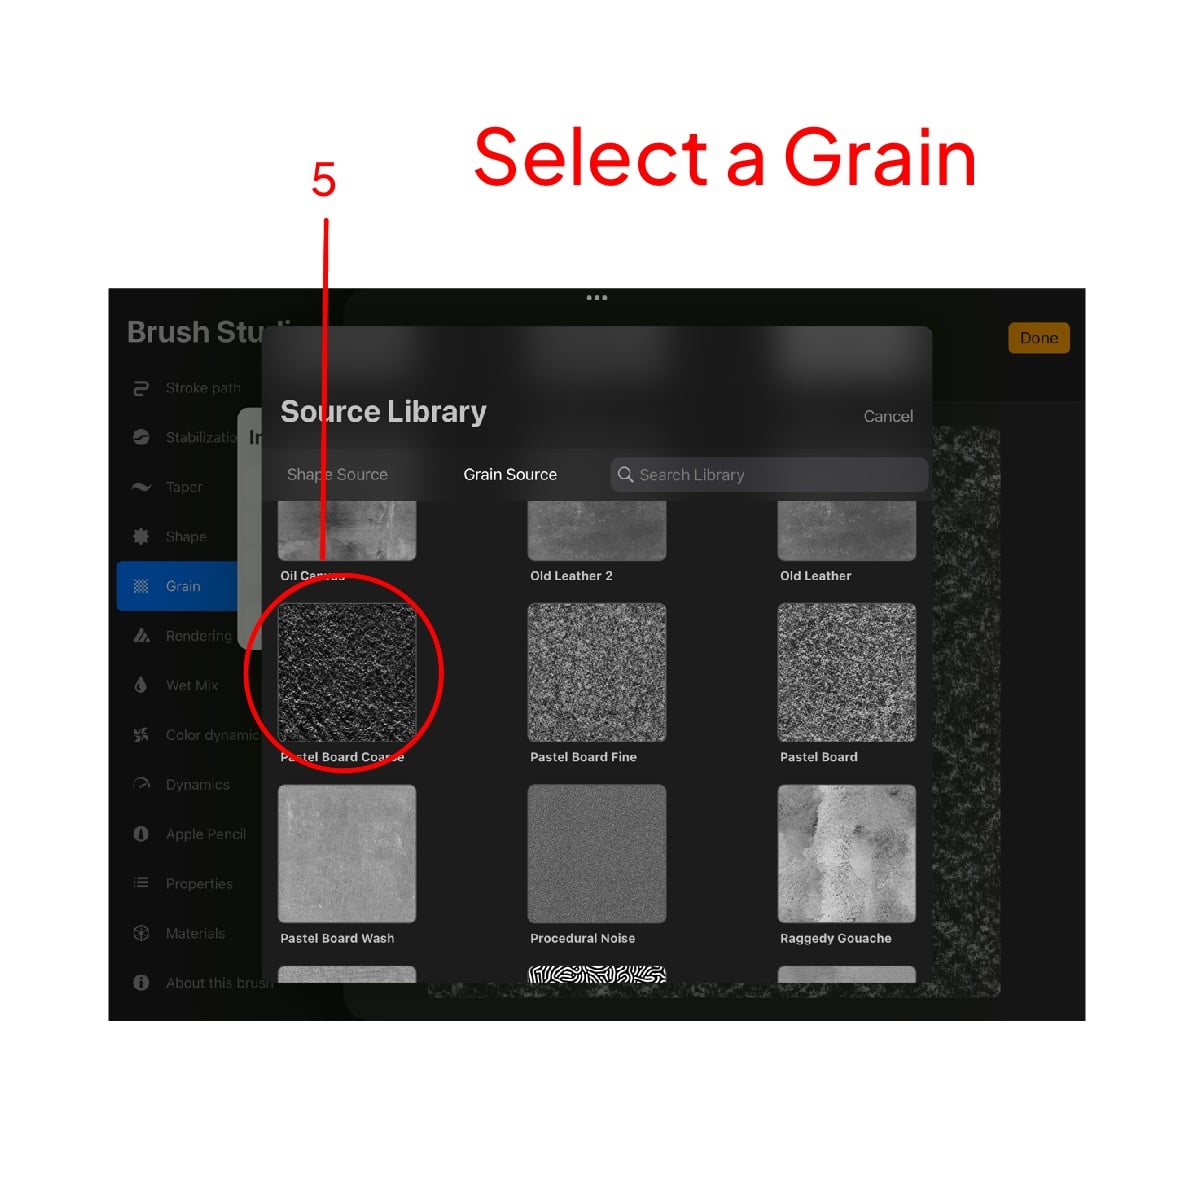 Selecting a grain